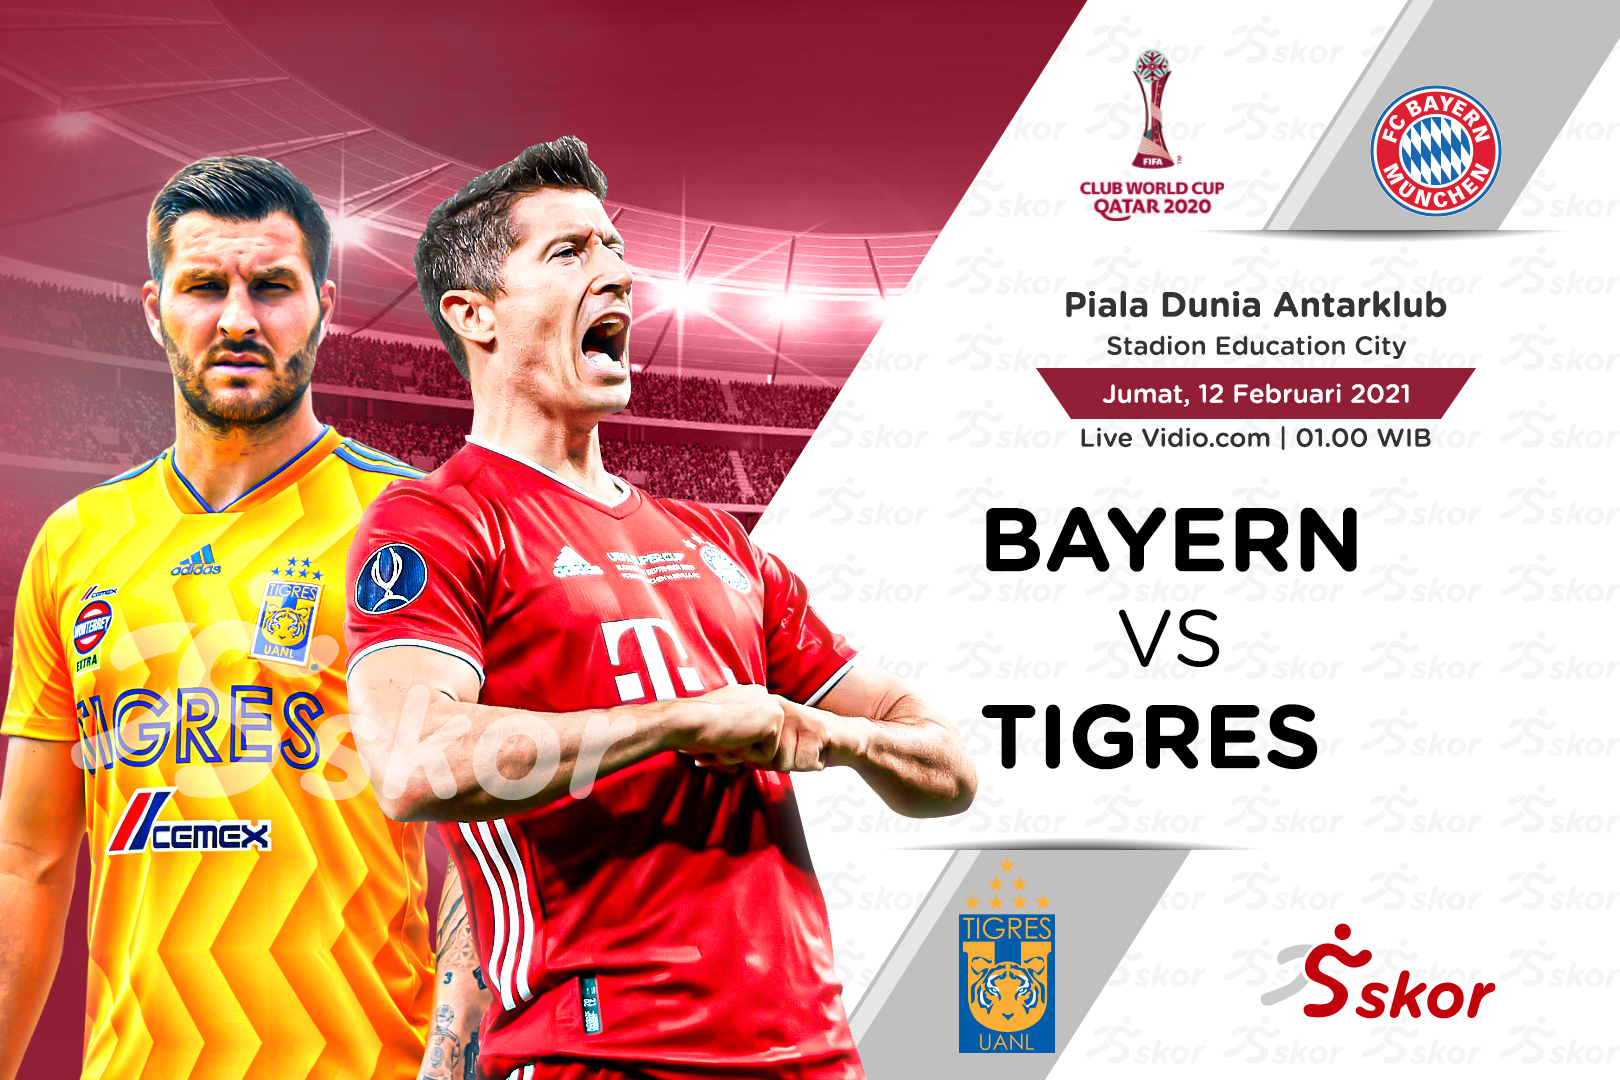 Prediksi Final Piala Dunia Antarklub: Tantang Tigres, Bayer Munchen Tatap Sextuple!